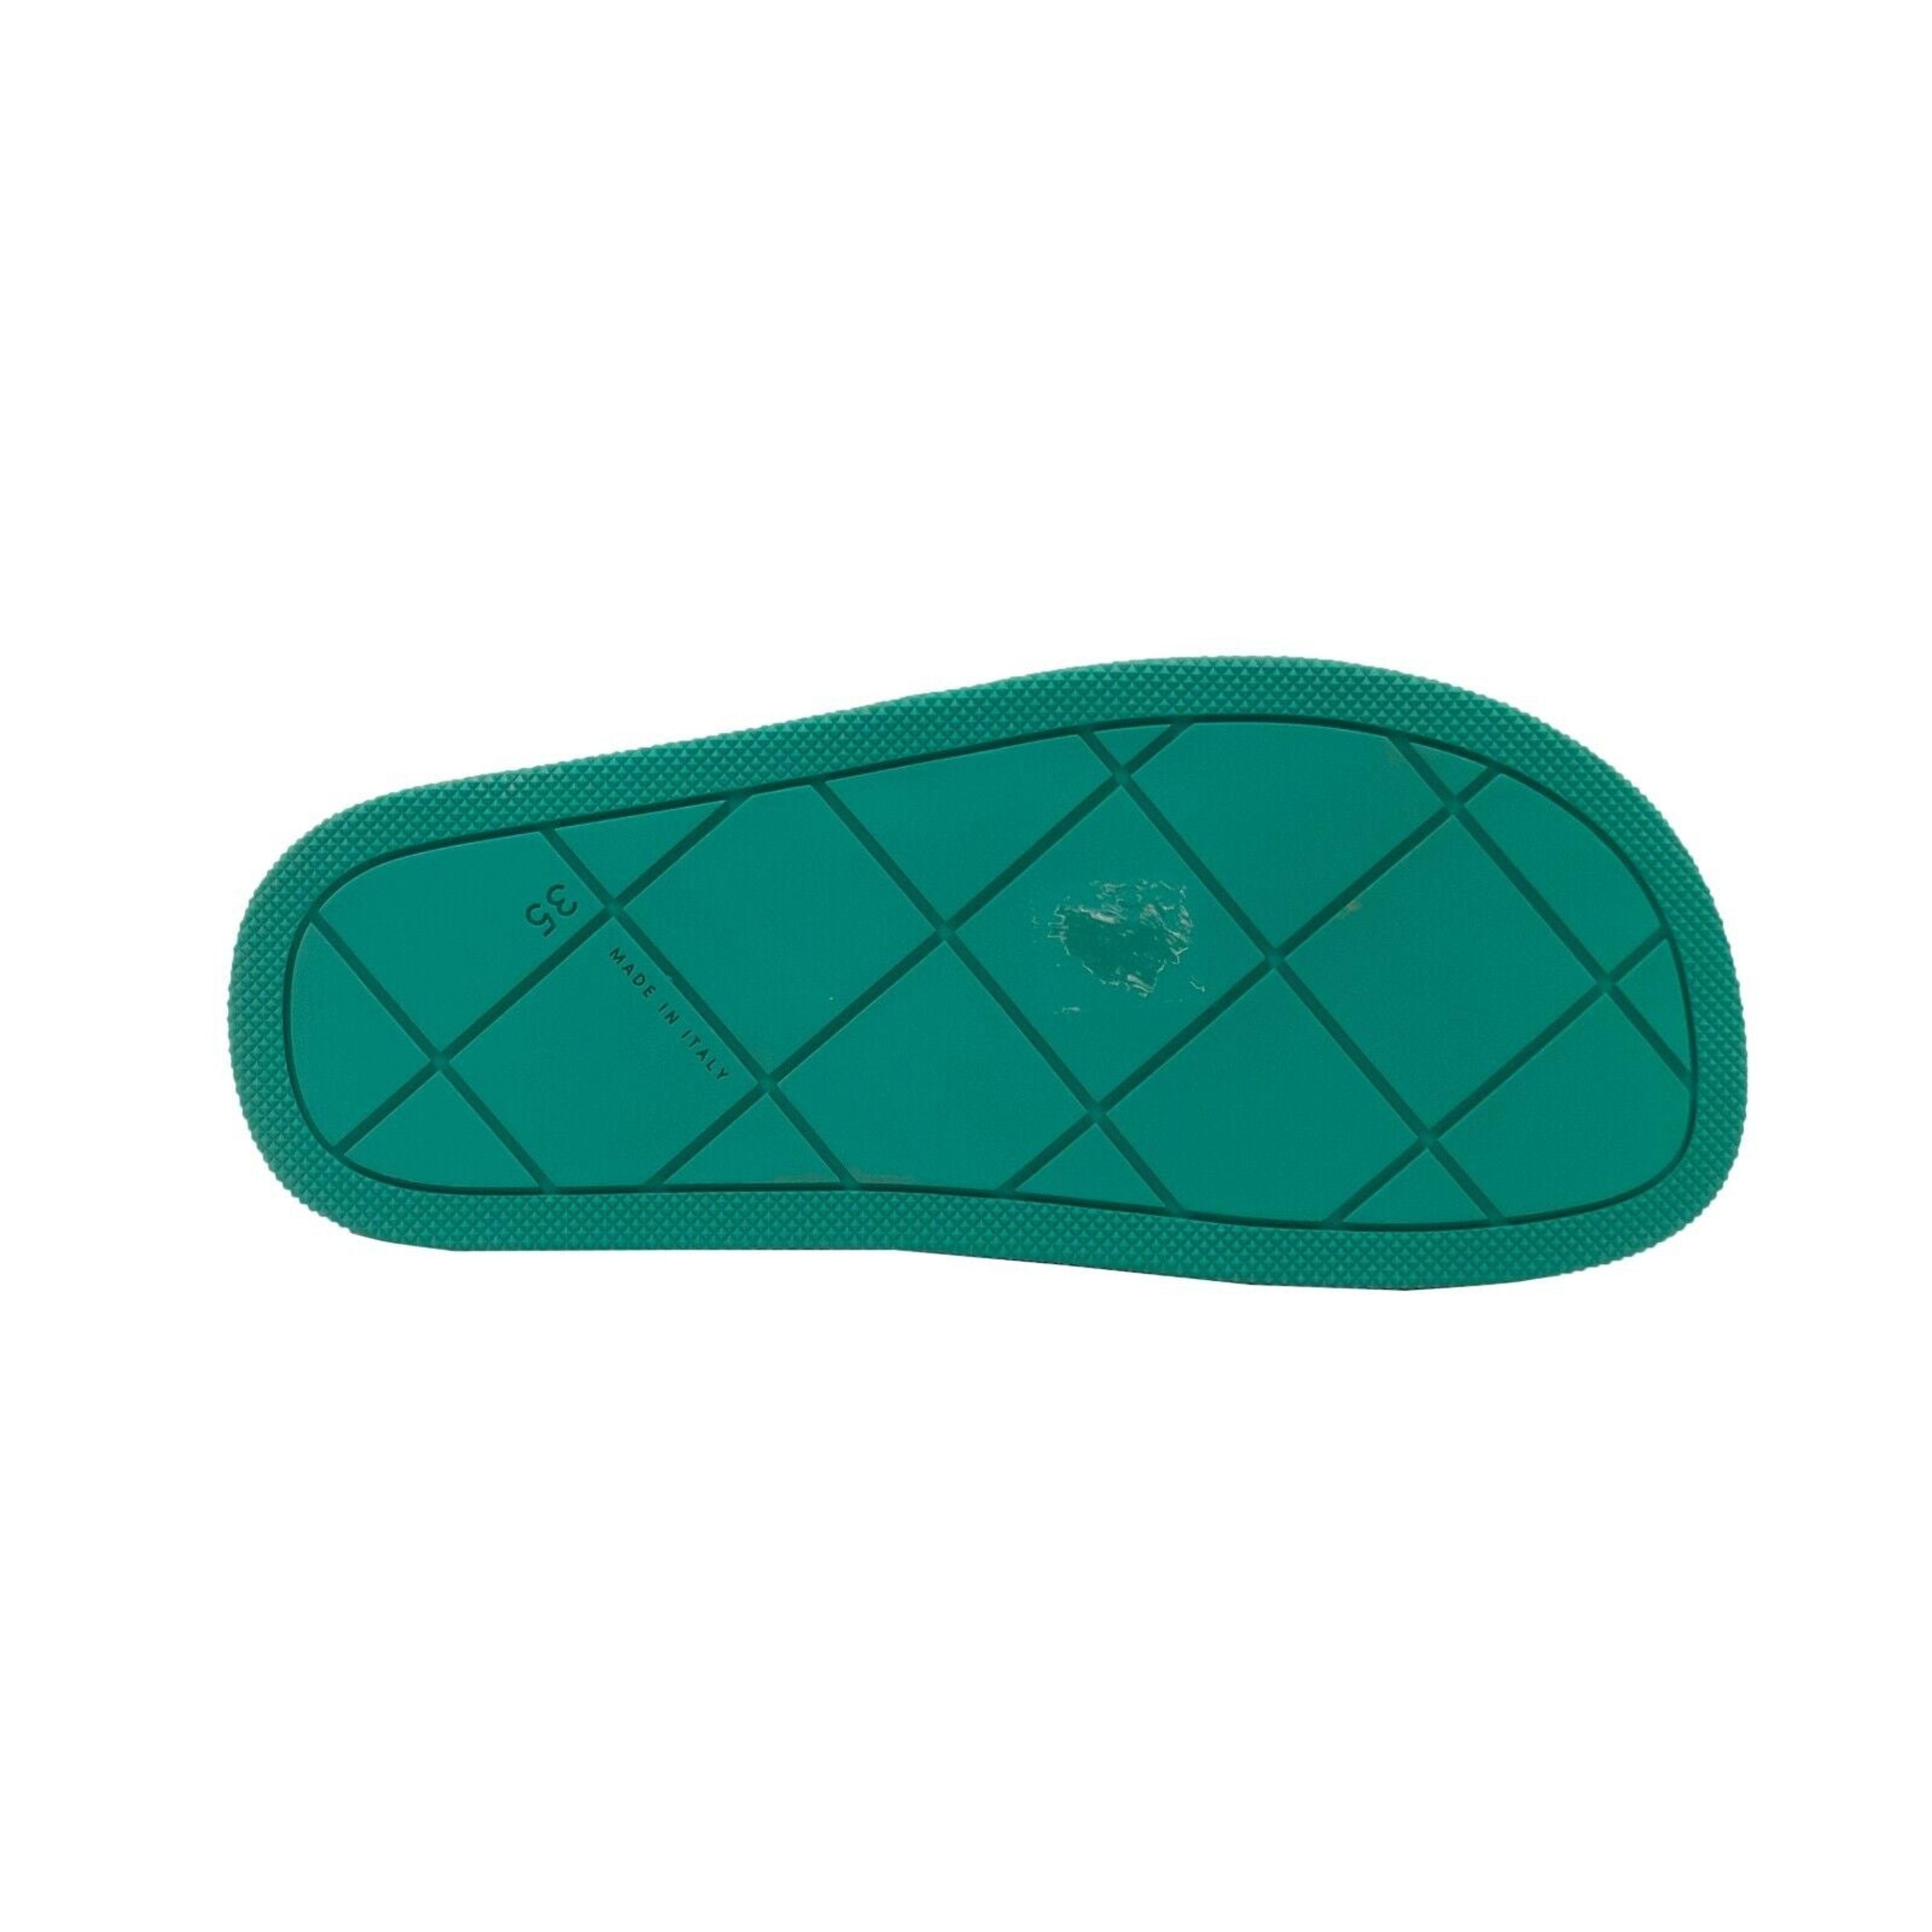 Alternate View 4 of Teal Blue Rubber Slide Sandals